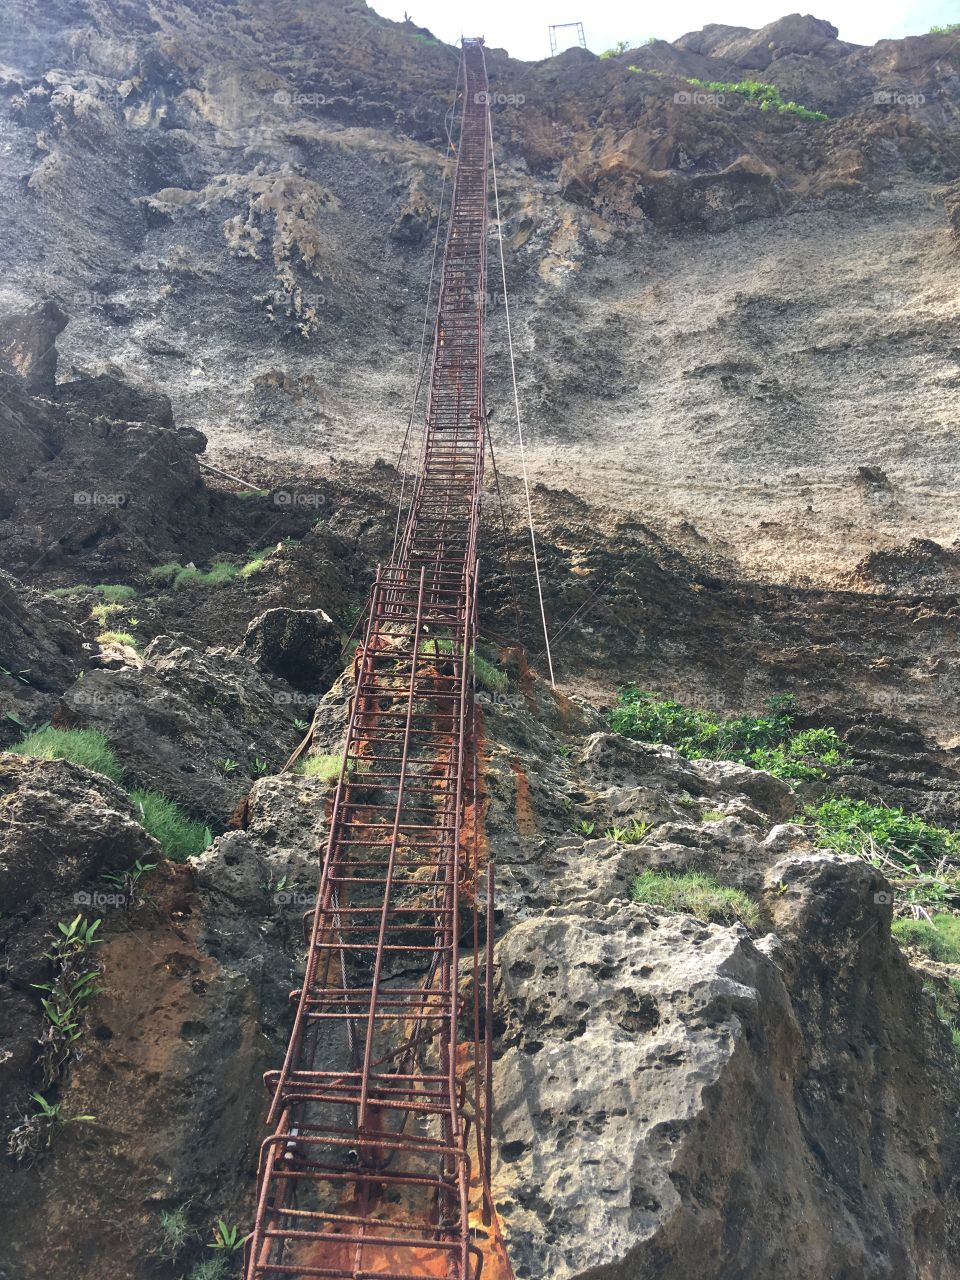 Ladder of Death